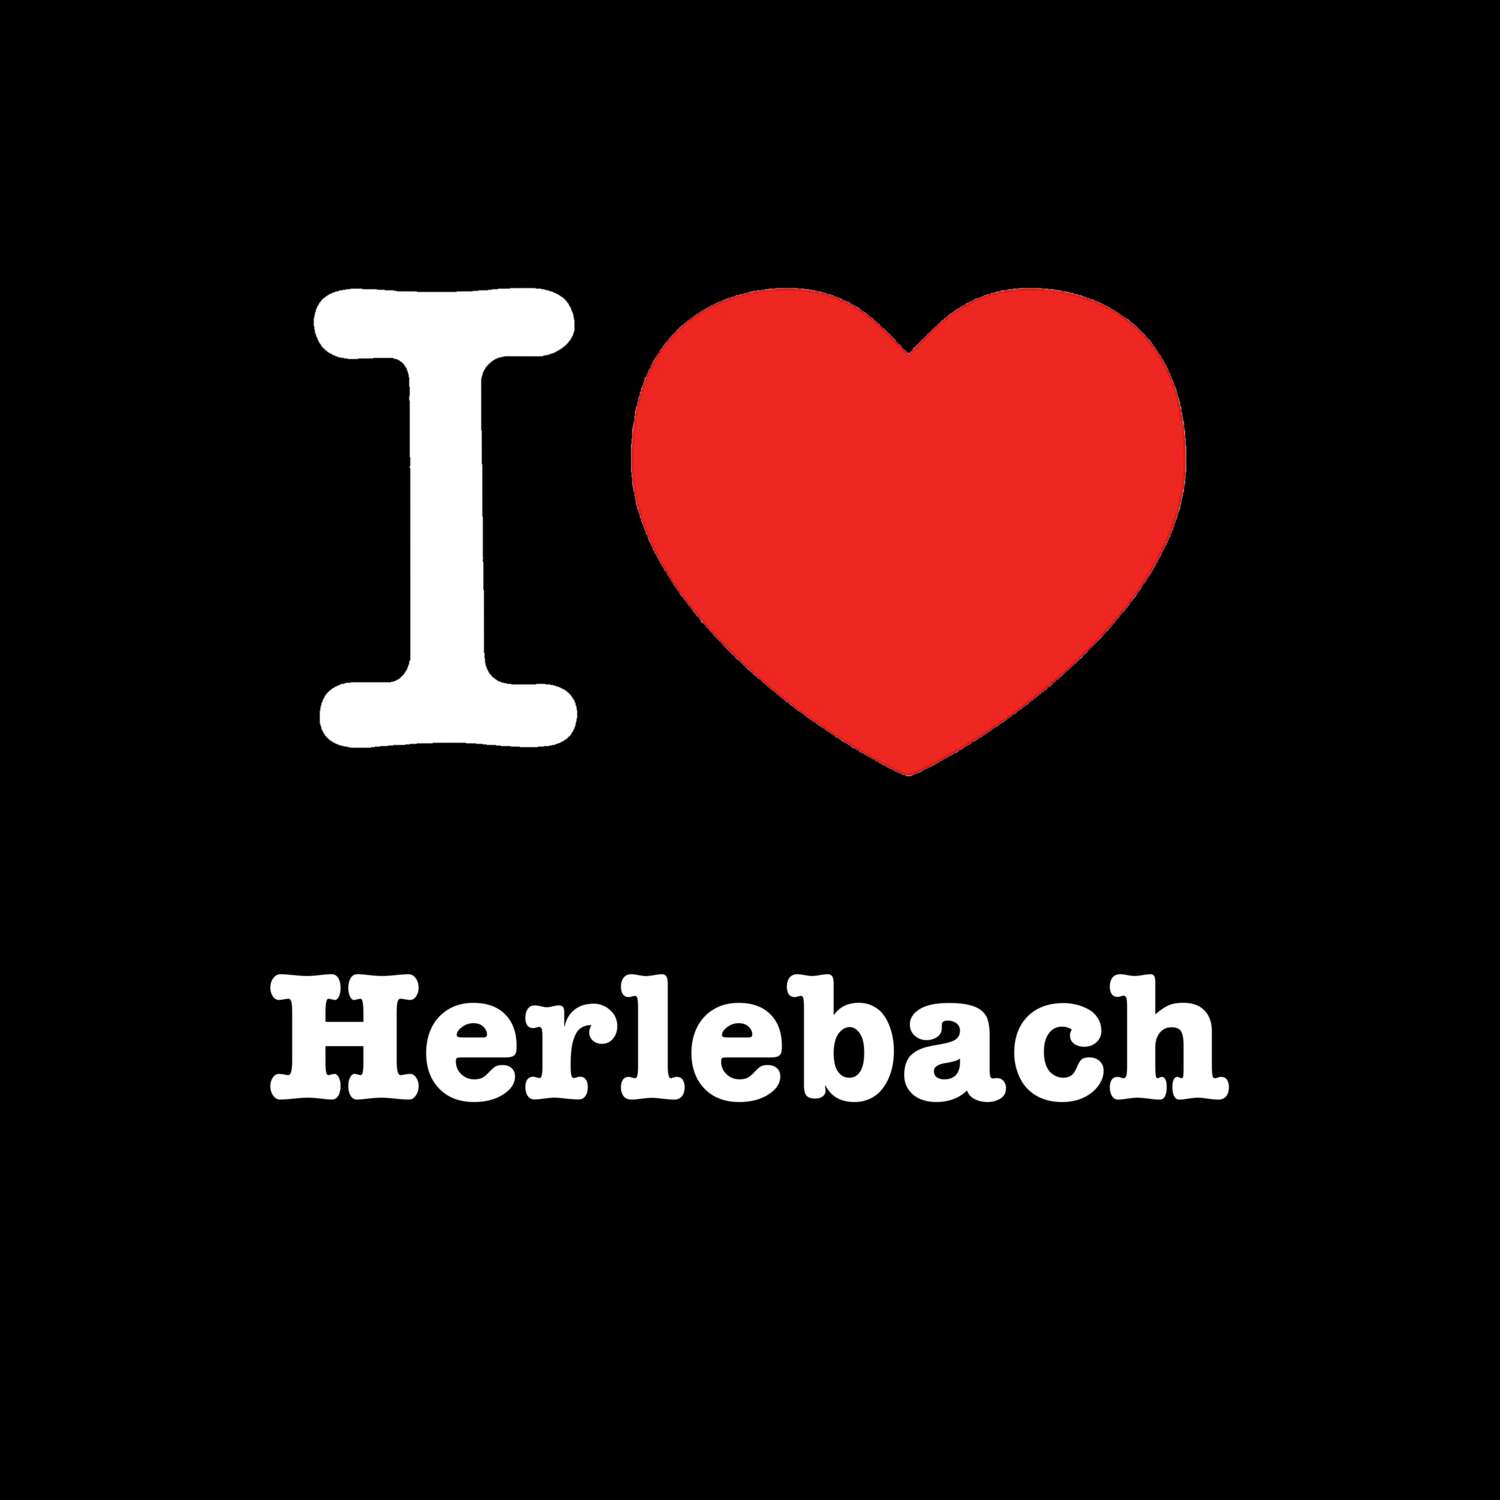 Herlebach T-Shirt »I love«